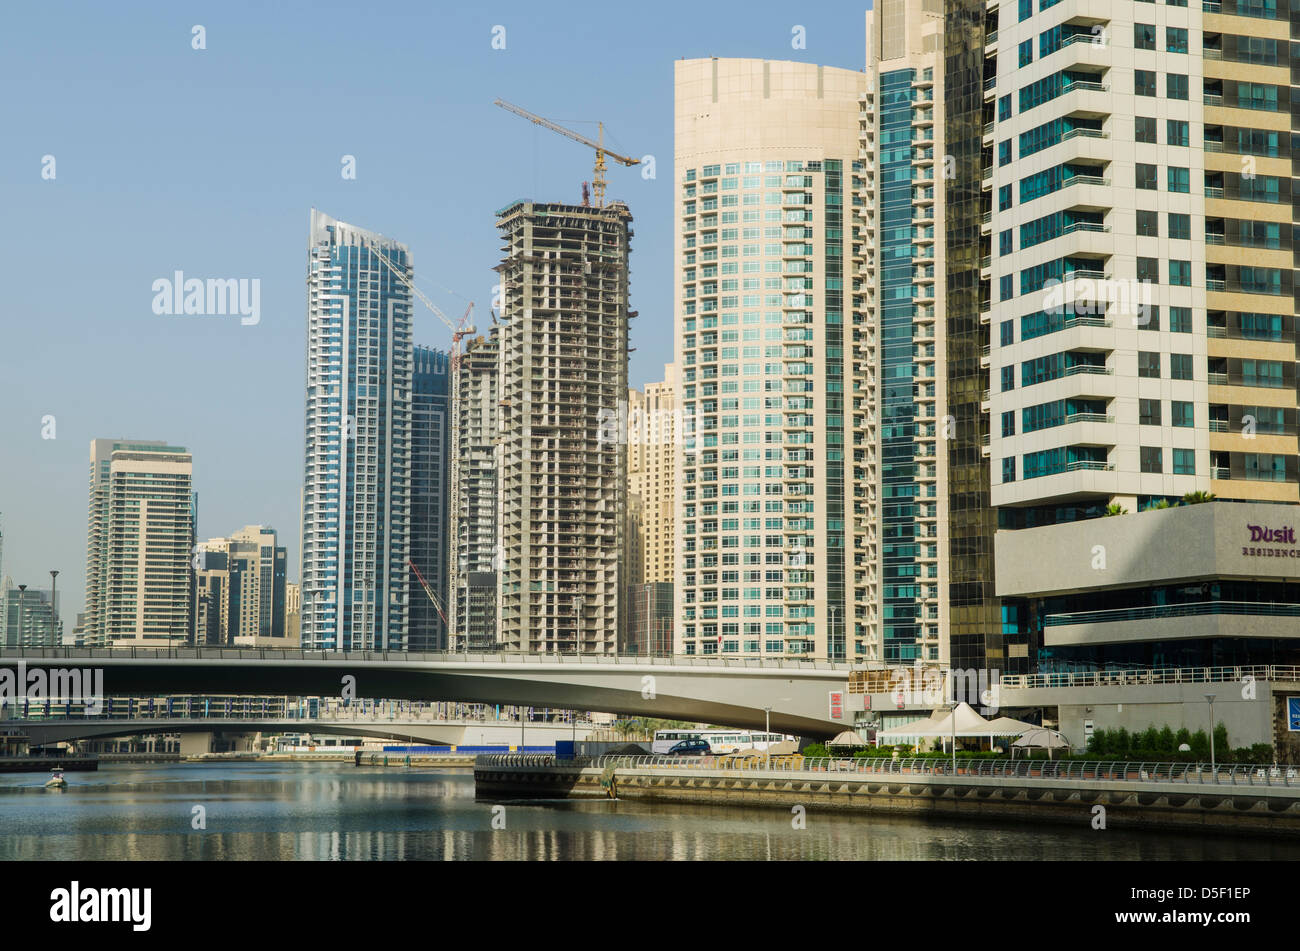 Les immeubles de la Marina de Dubaï Banque D'Images